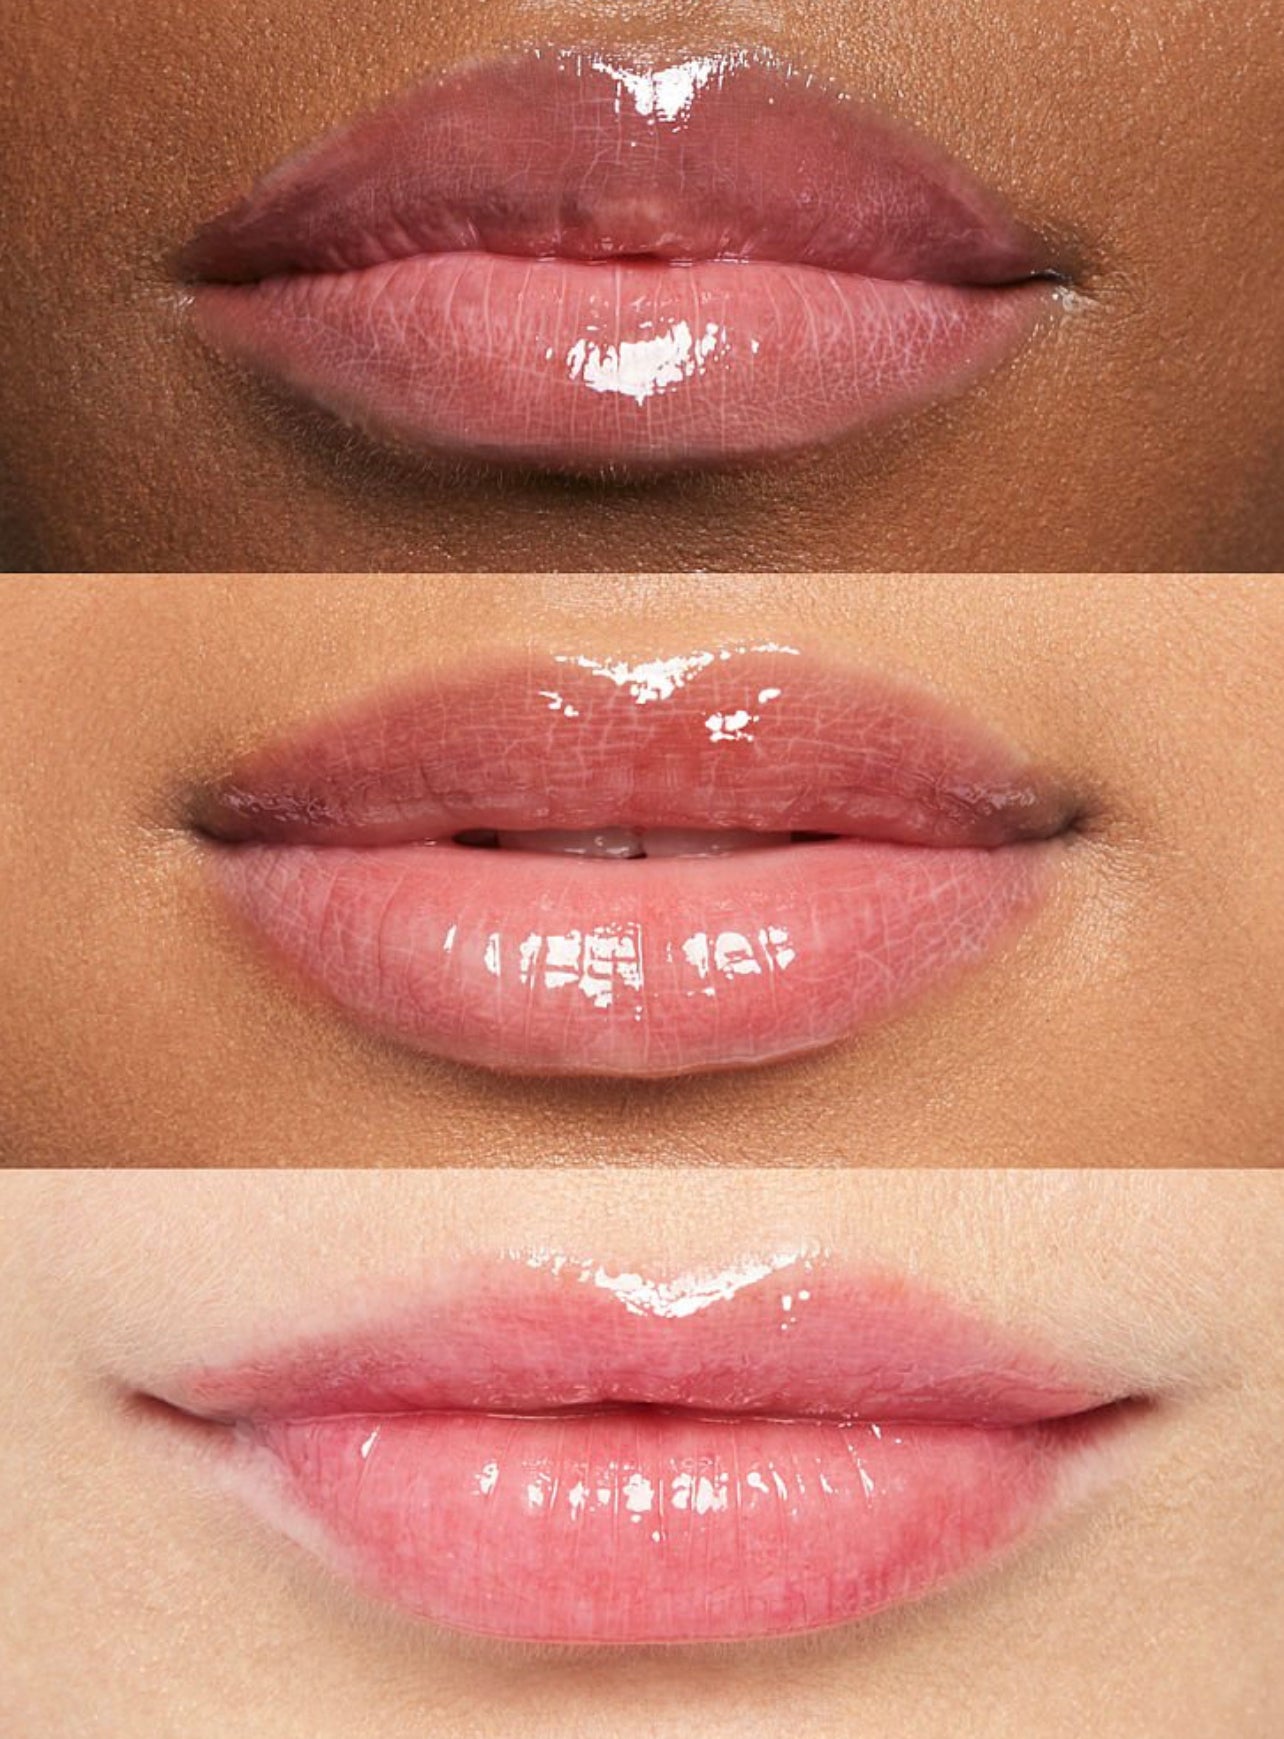 "Victoria’s Secret" Cherry Bomb Flavor Lip Gloss